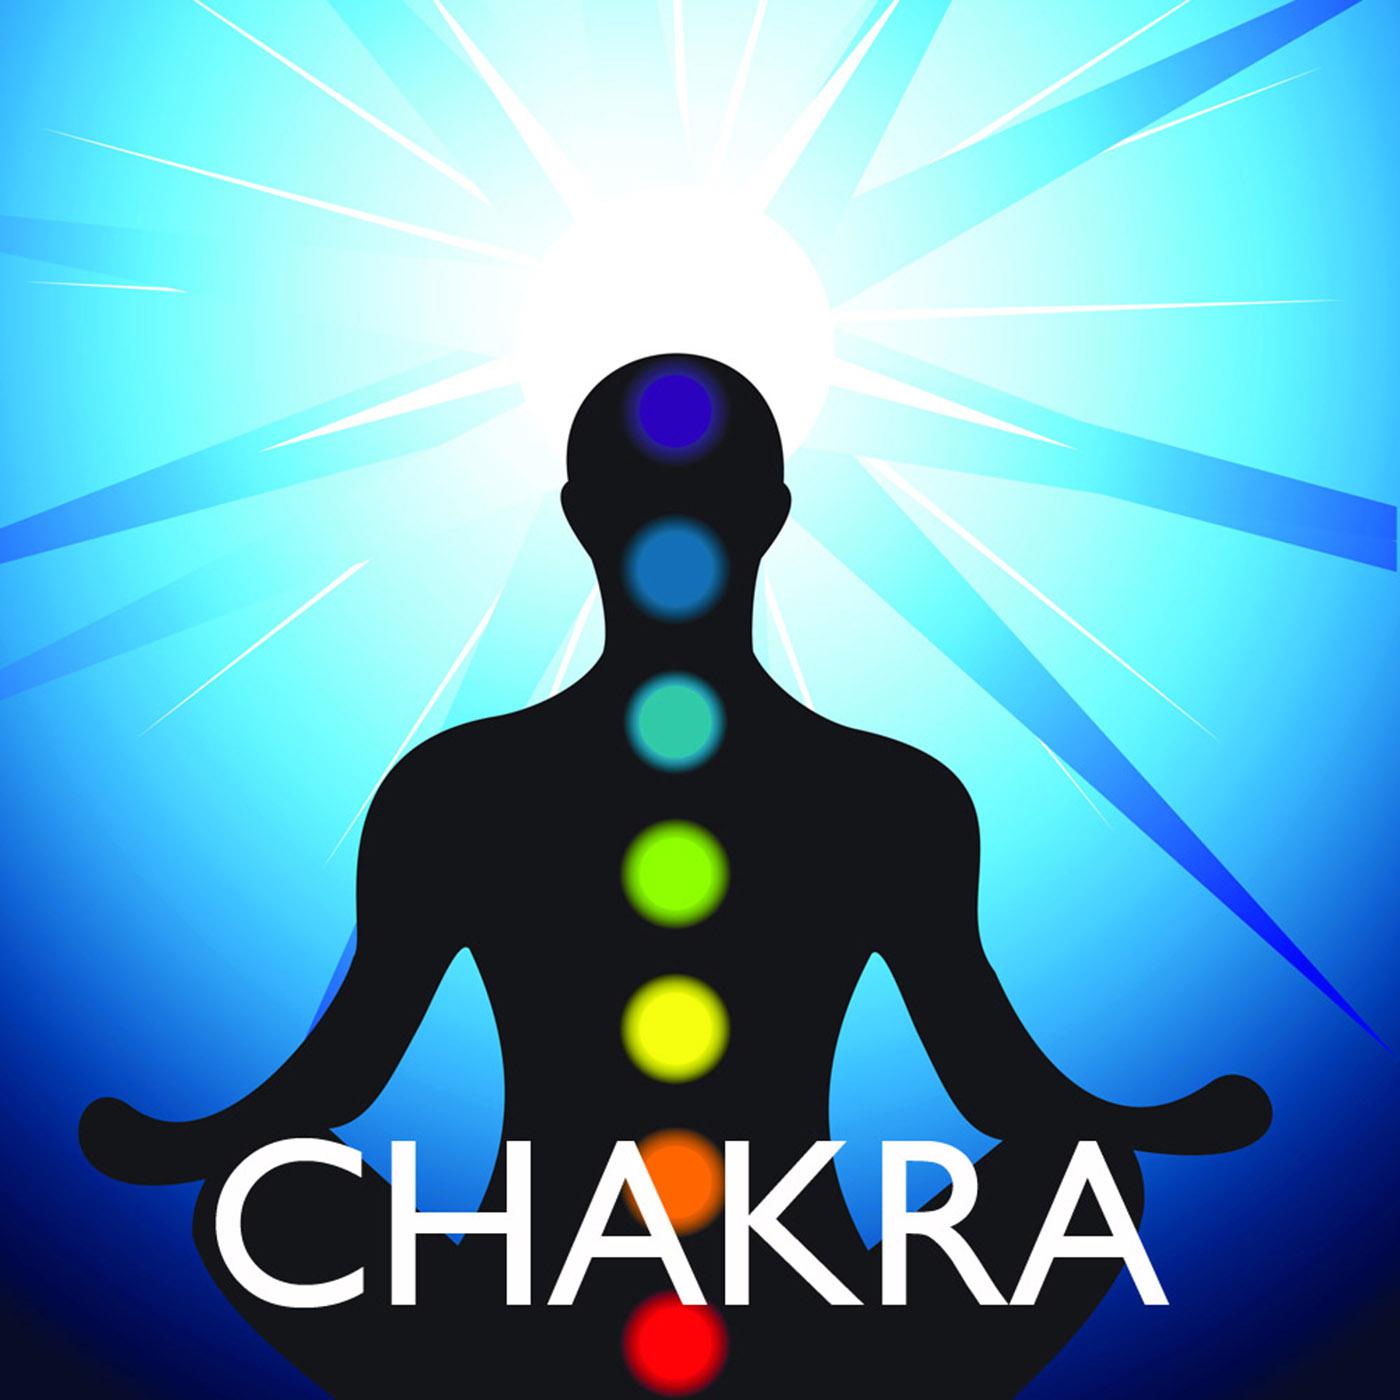 Chakra s Meditation Music